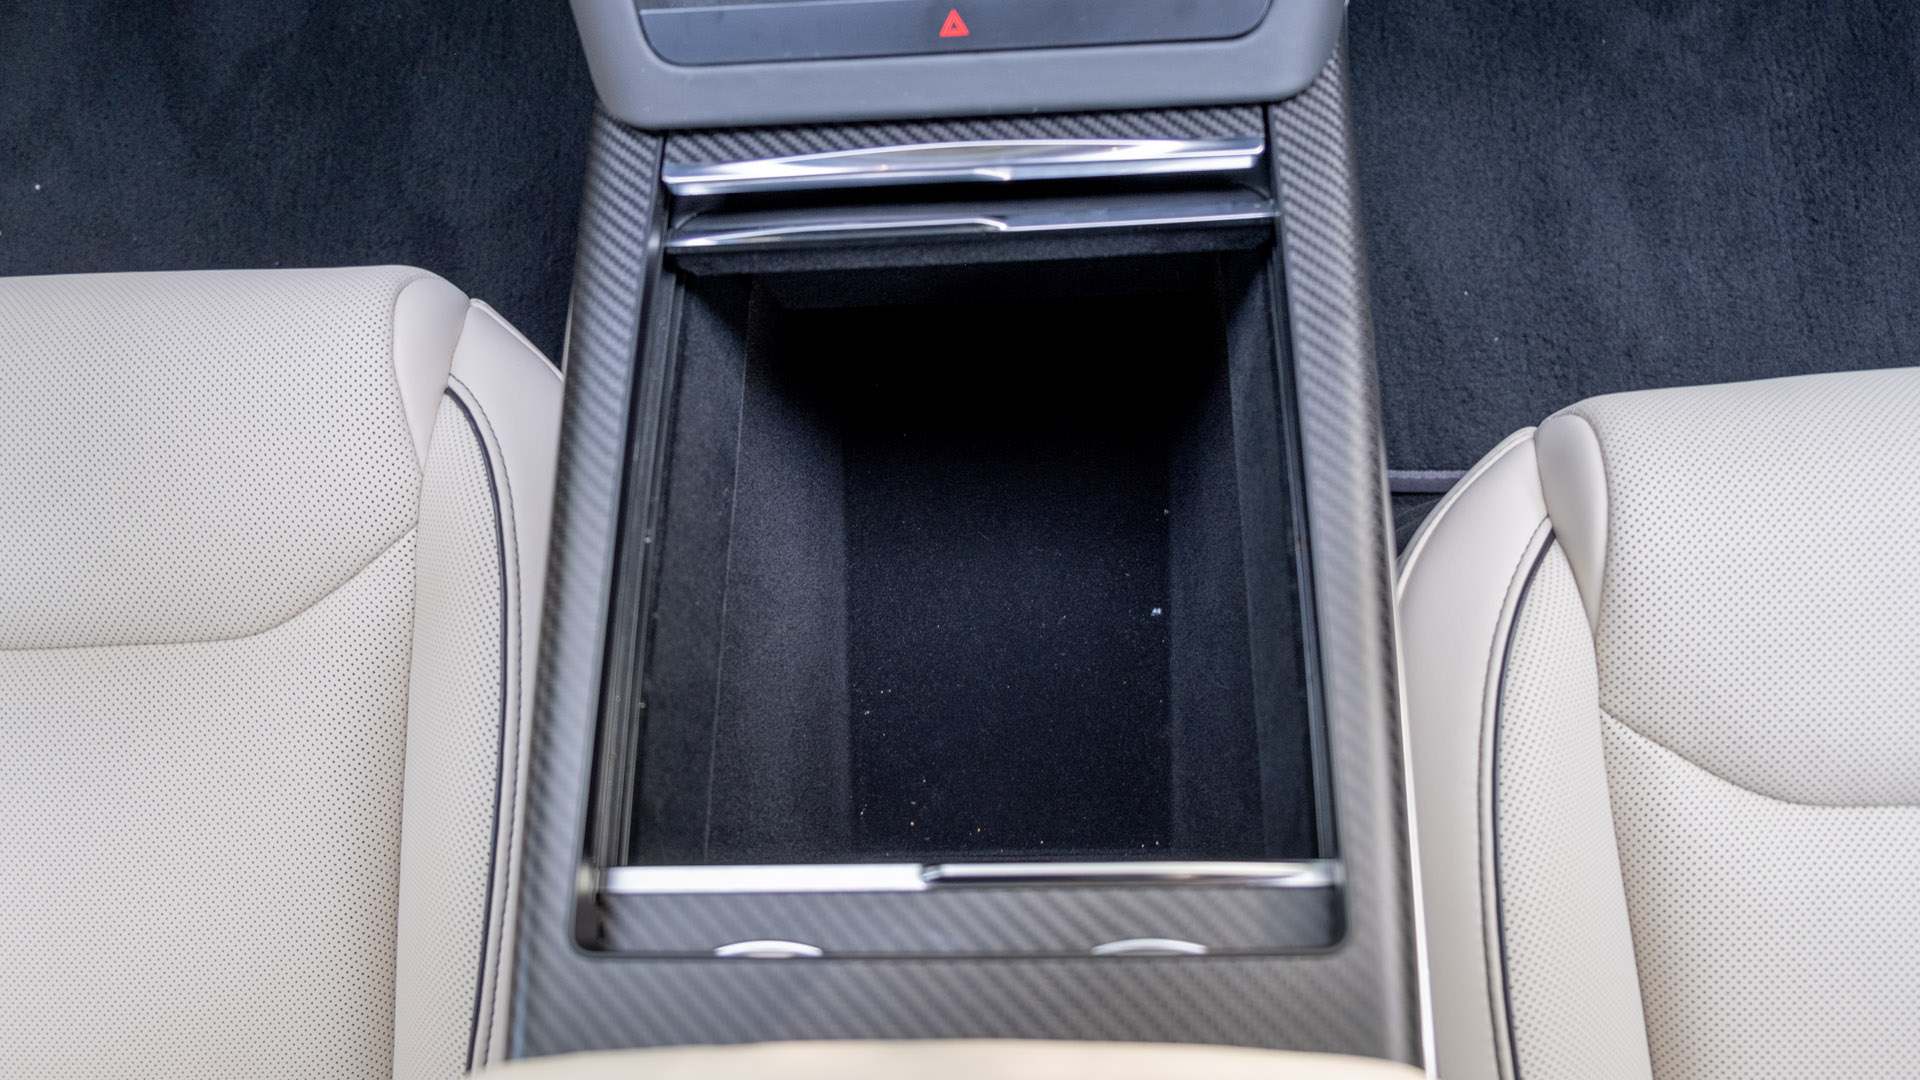 Tesla Model S Plaid front storage